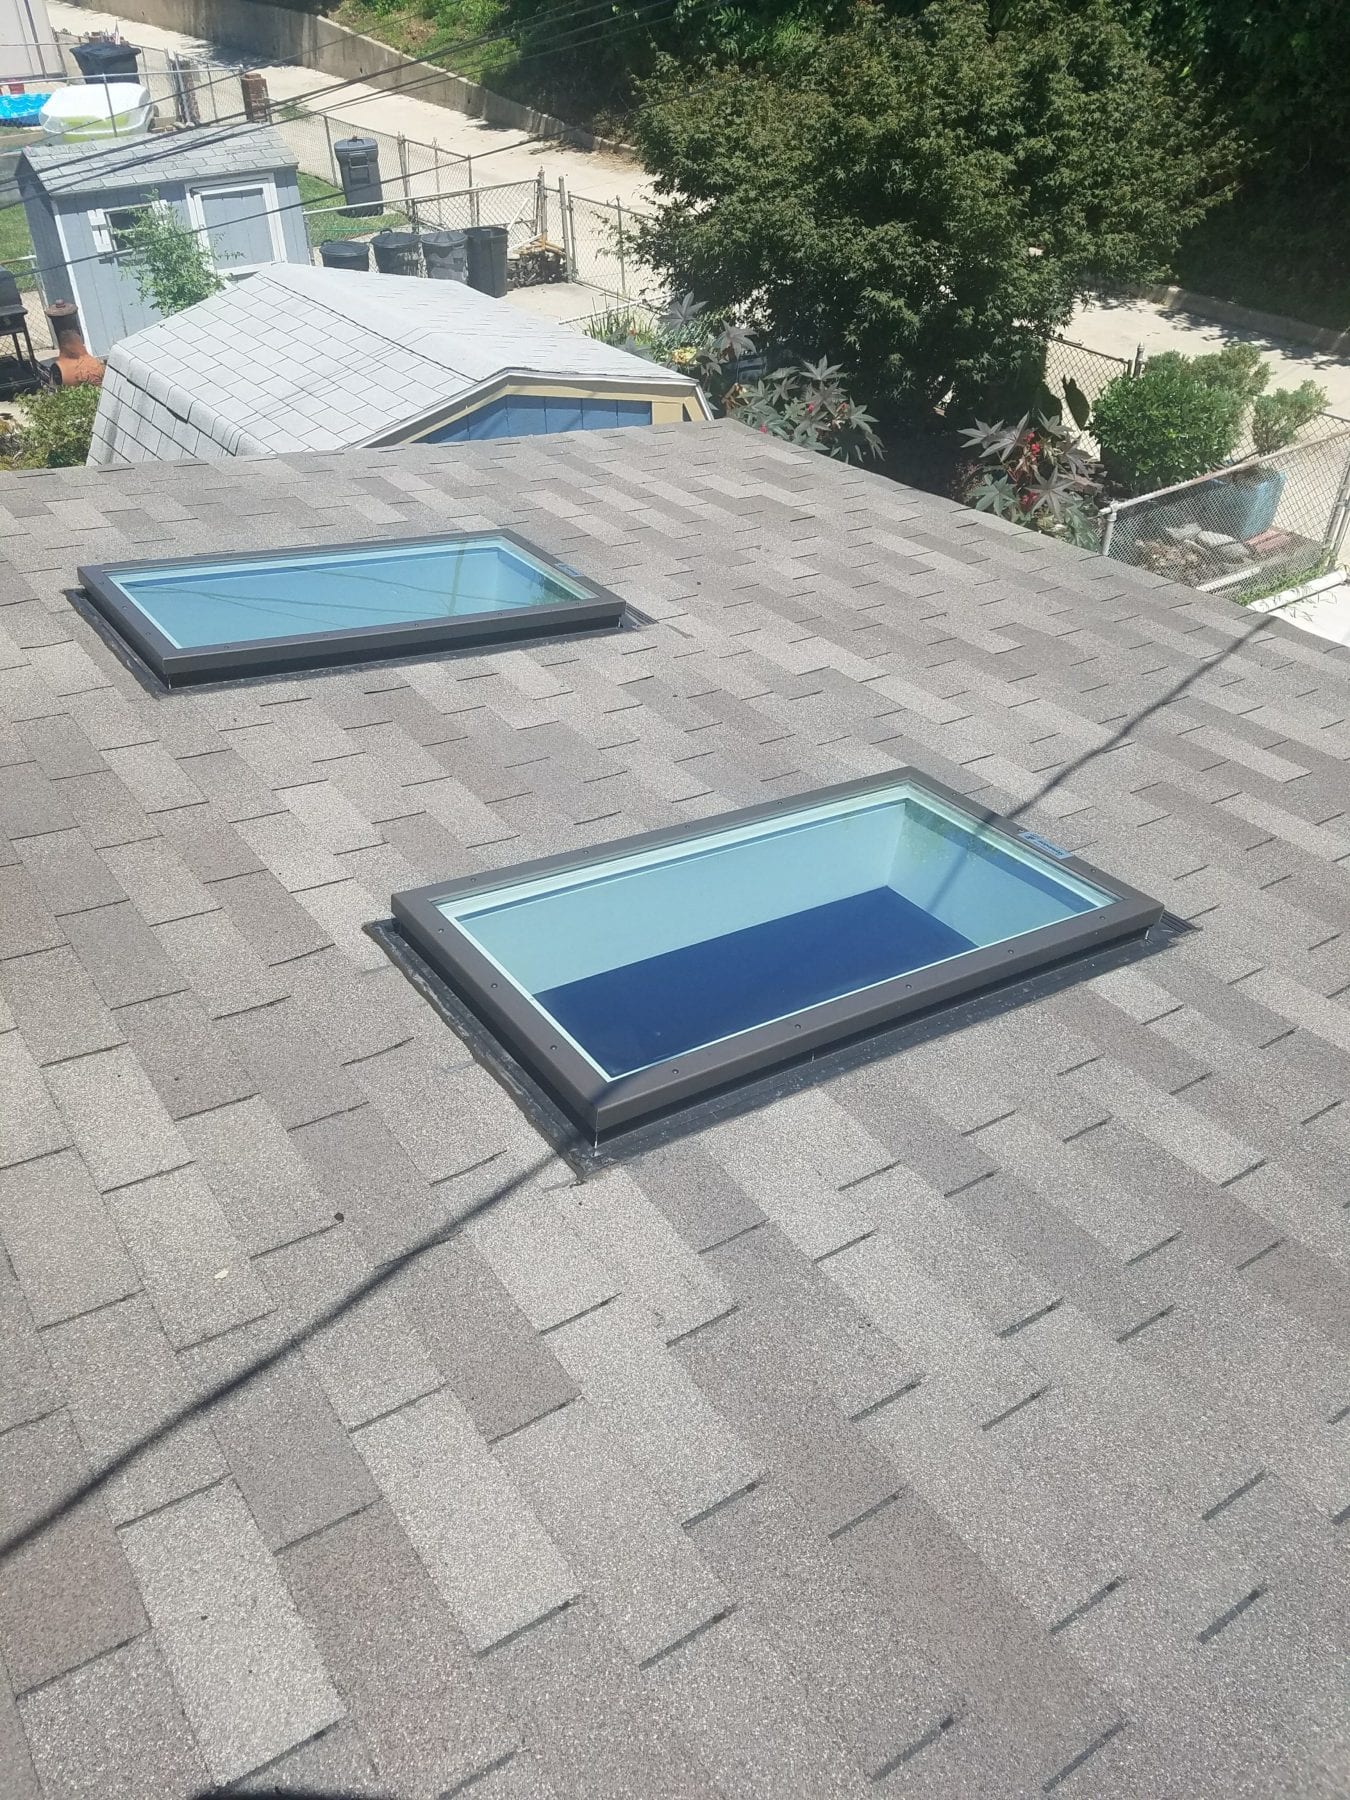 roofing with asphalt shingles pdf